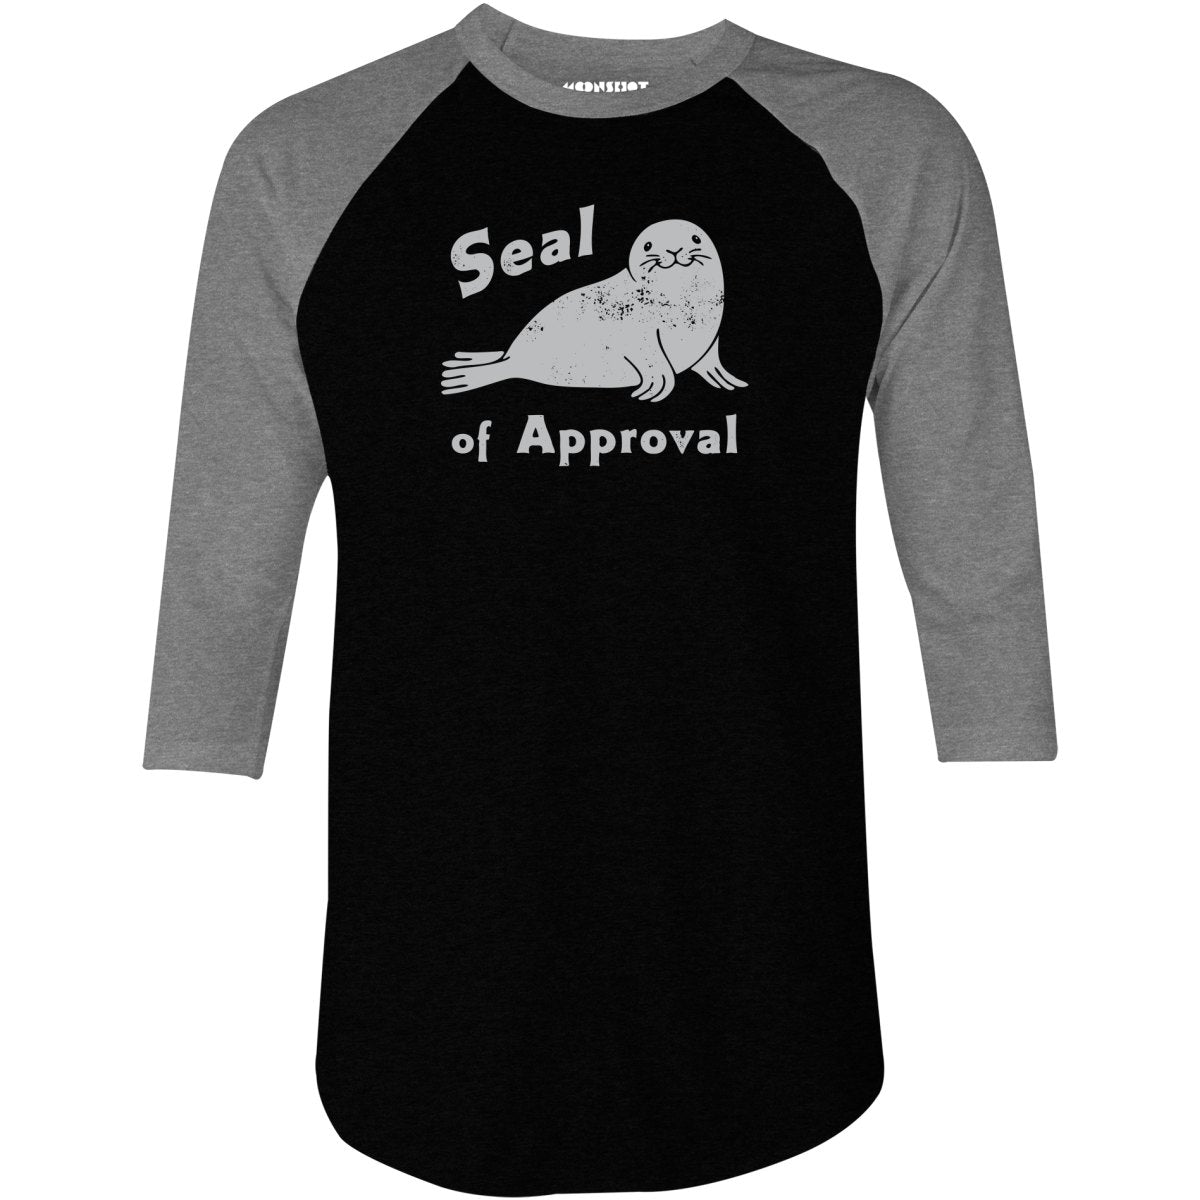 Seal of Approval - 3/4 Sleeve Raglan T-Shirt